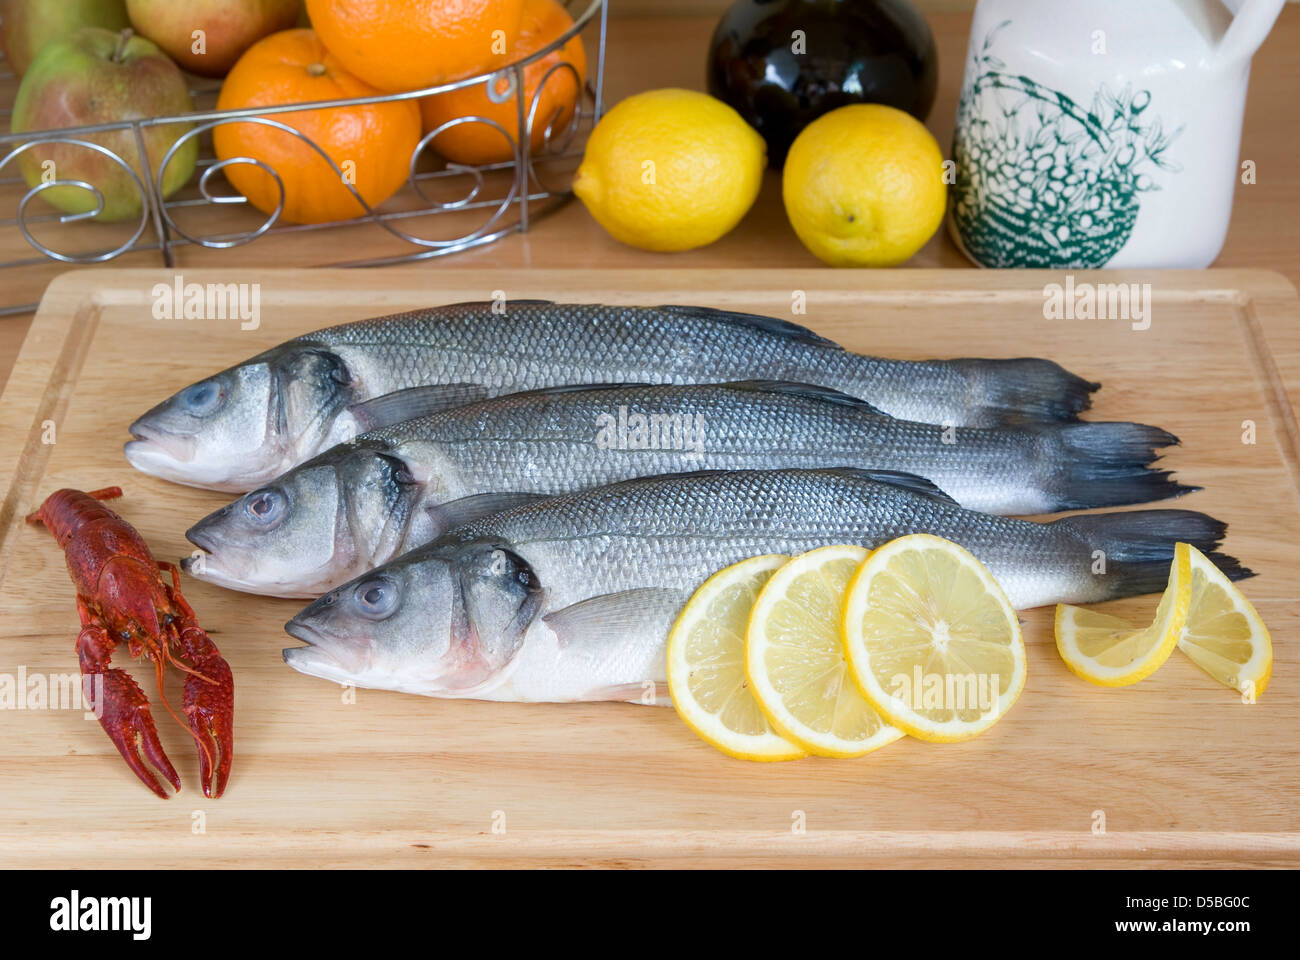 fresh fish and lemon slices on plank Stock Photo